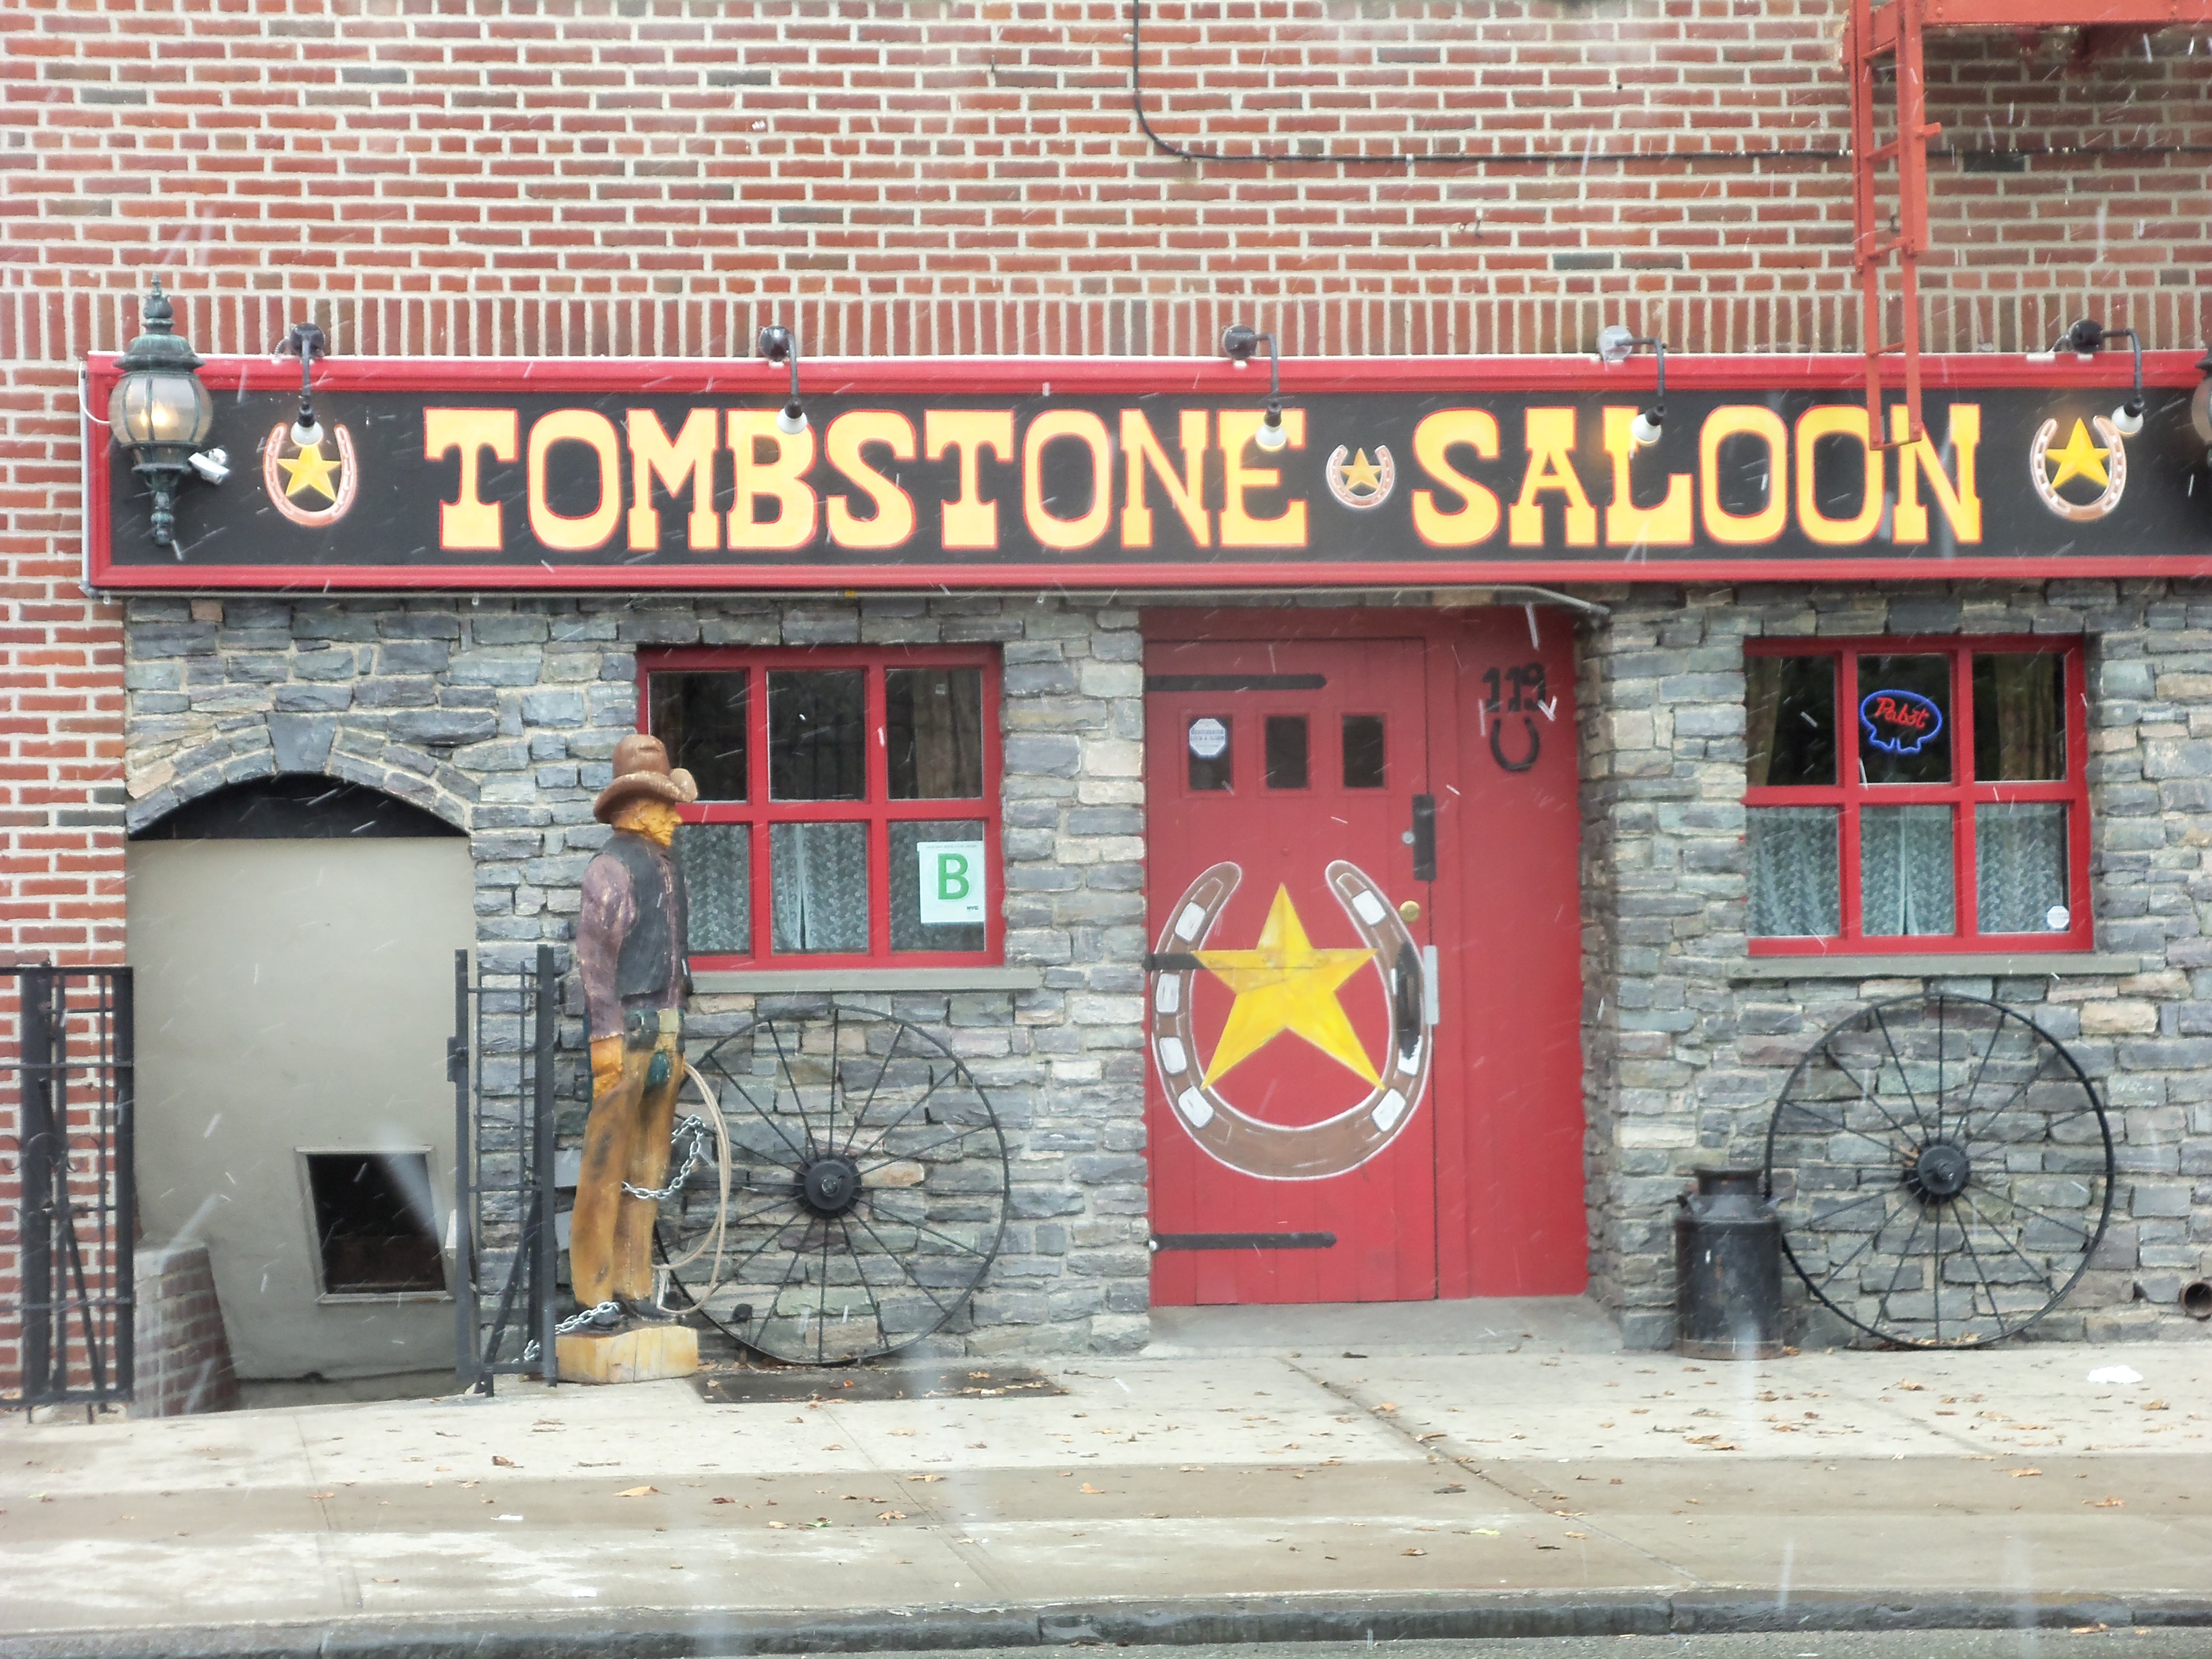 Tombstone Saloon, get it?